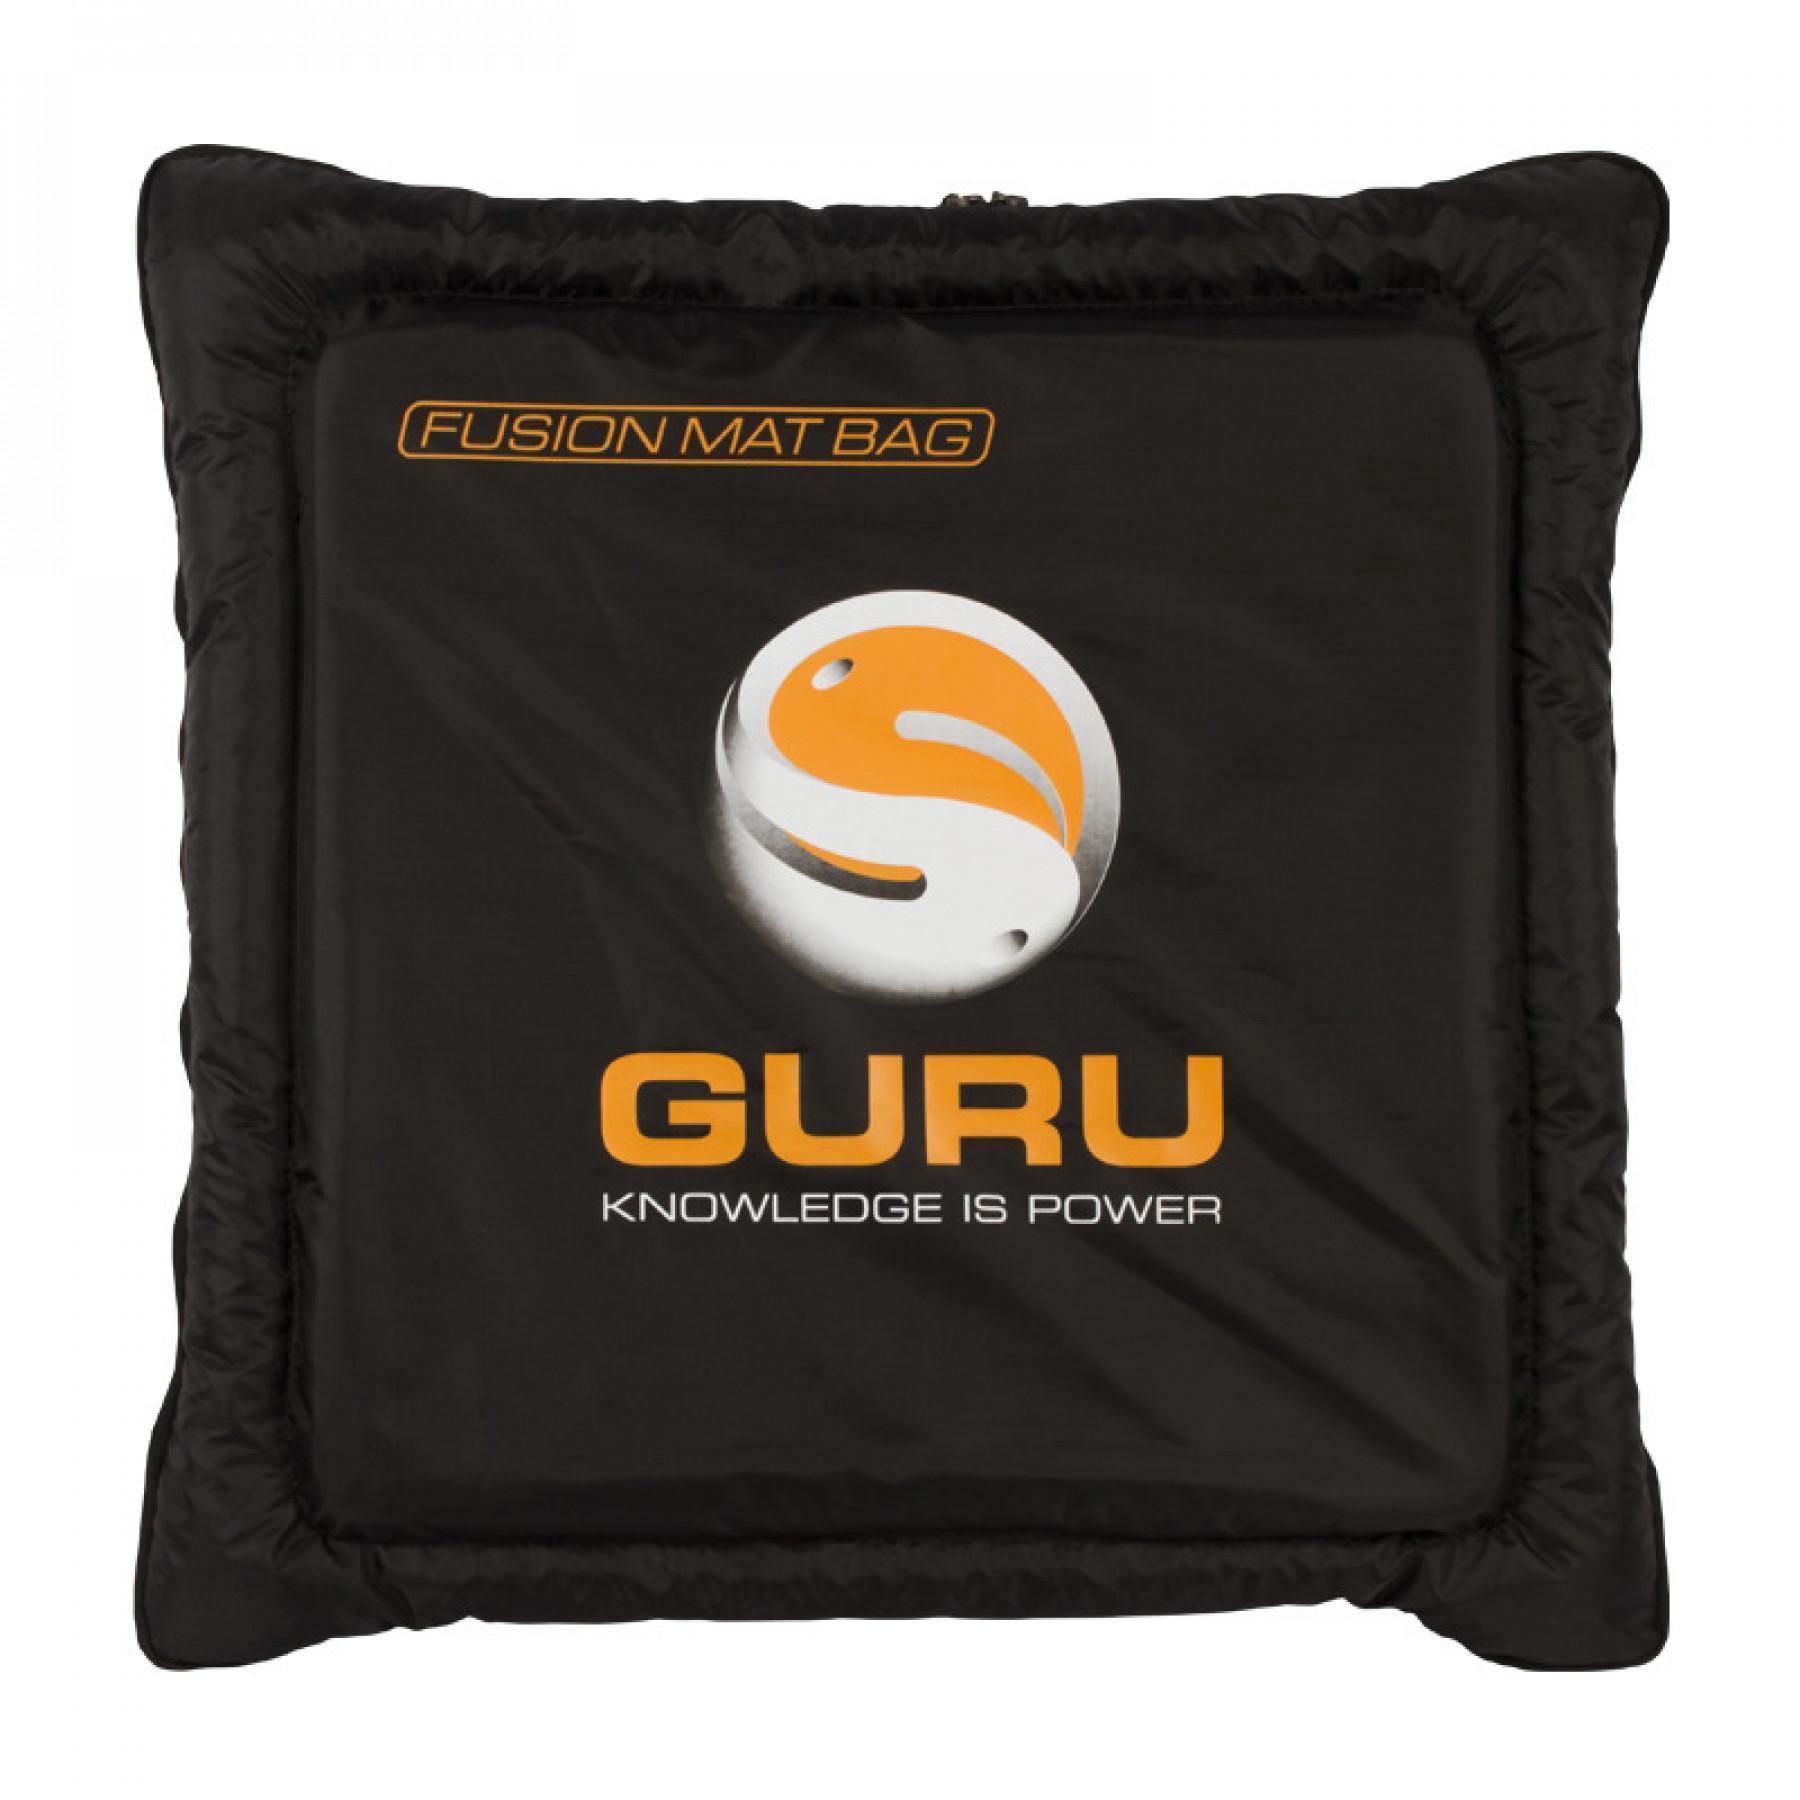 Reception mat Guru Fusion Mat Bag